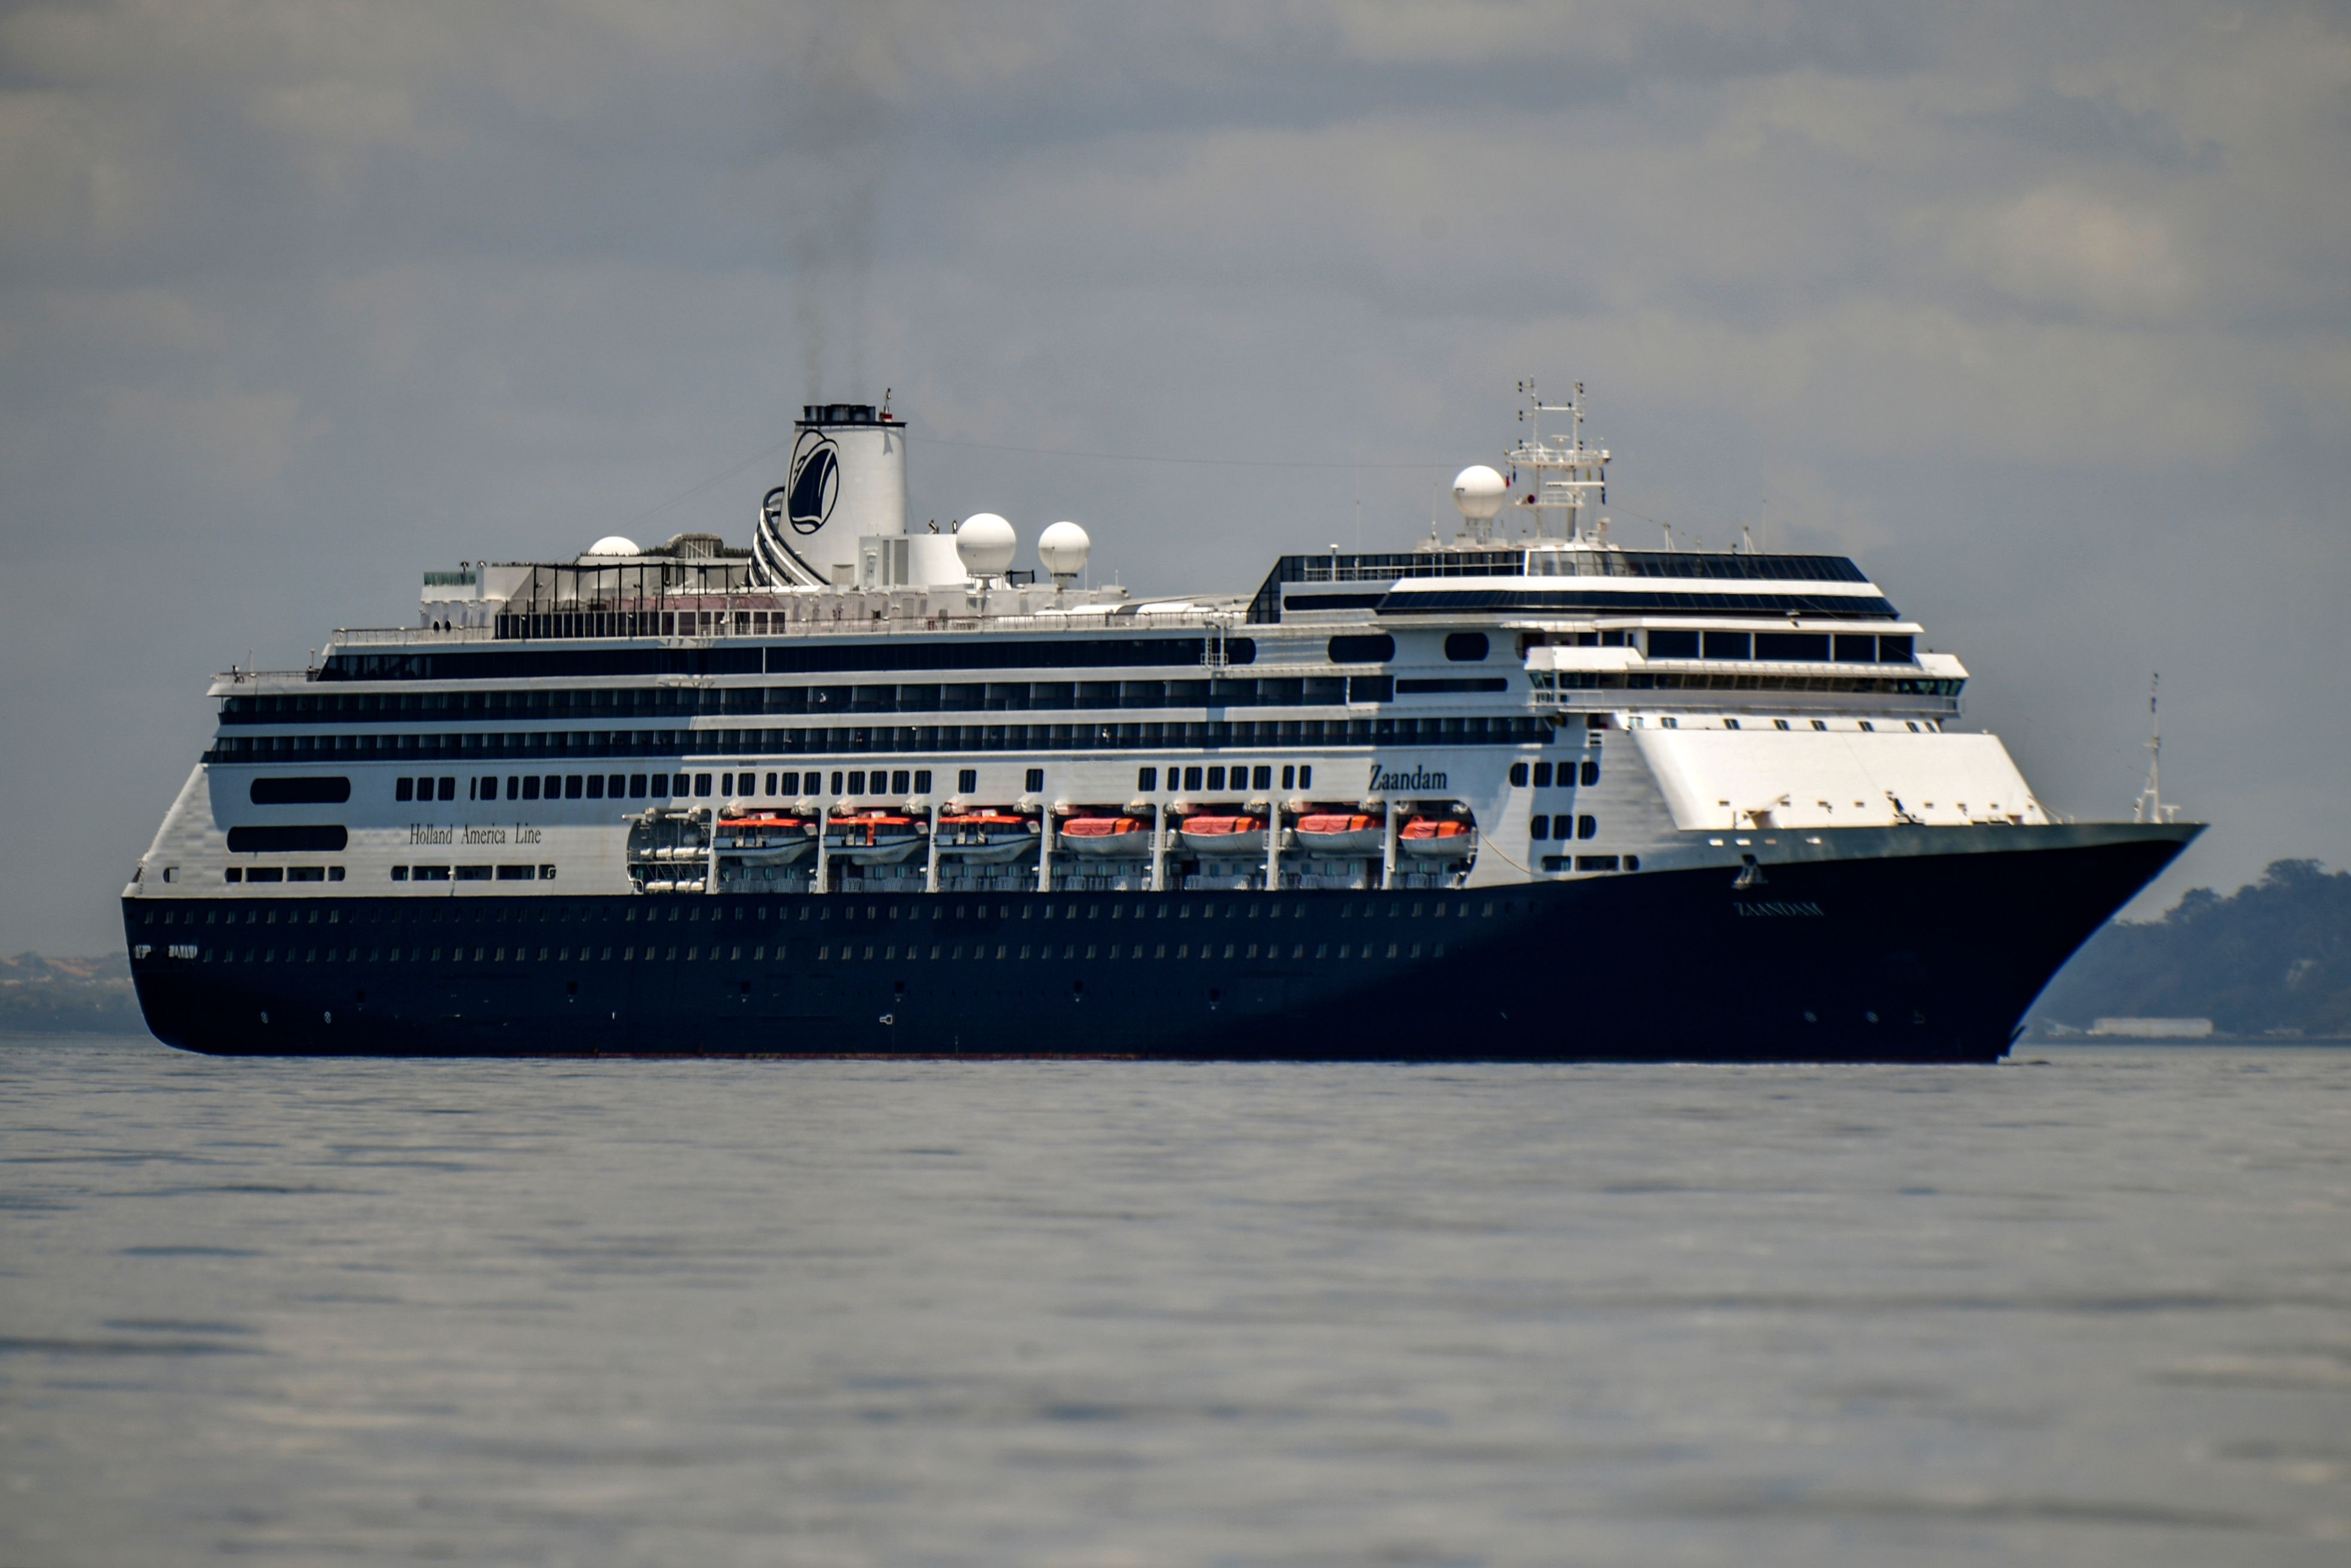 Holland America's cruise ship, the Zaandam, enters the Panama City bay on March 27.